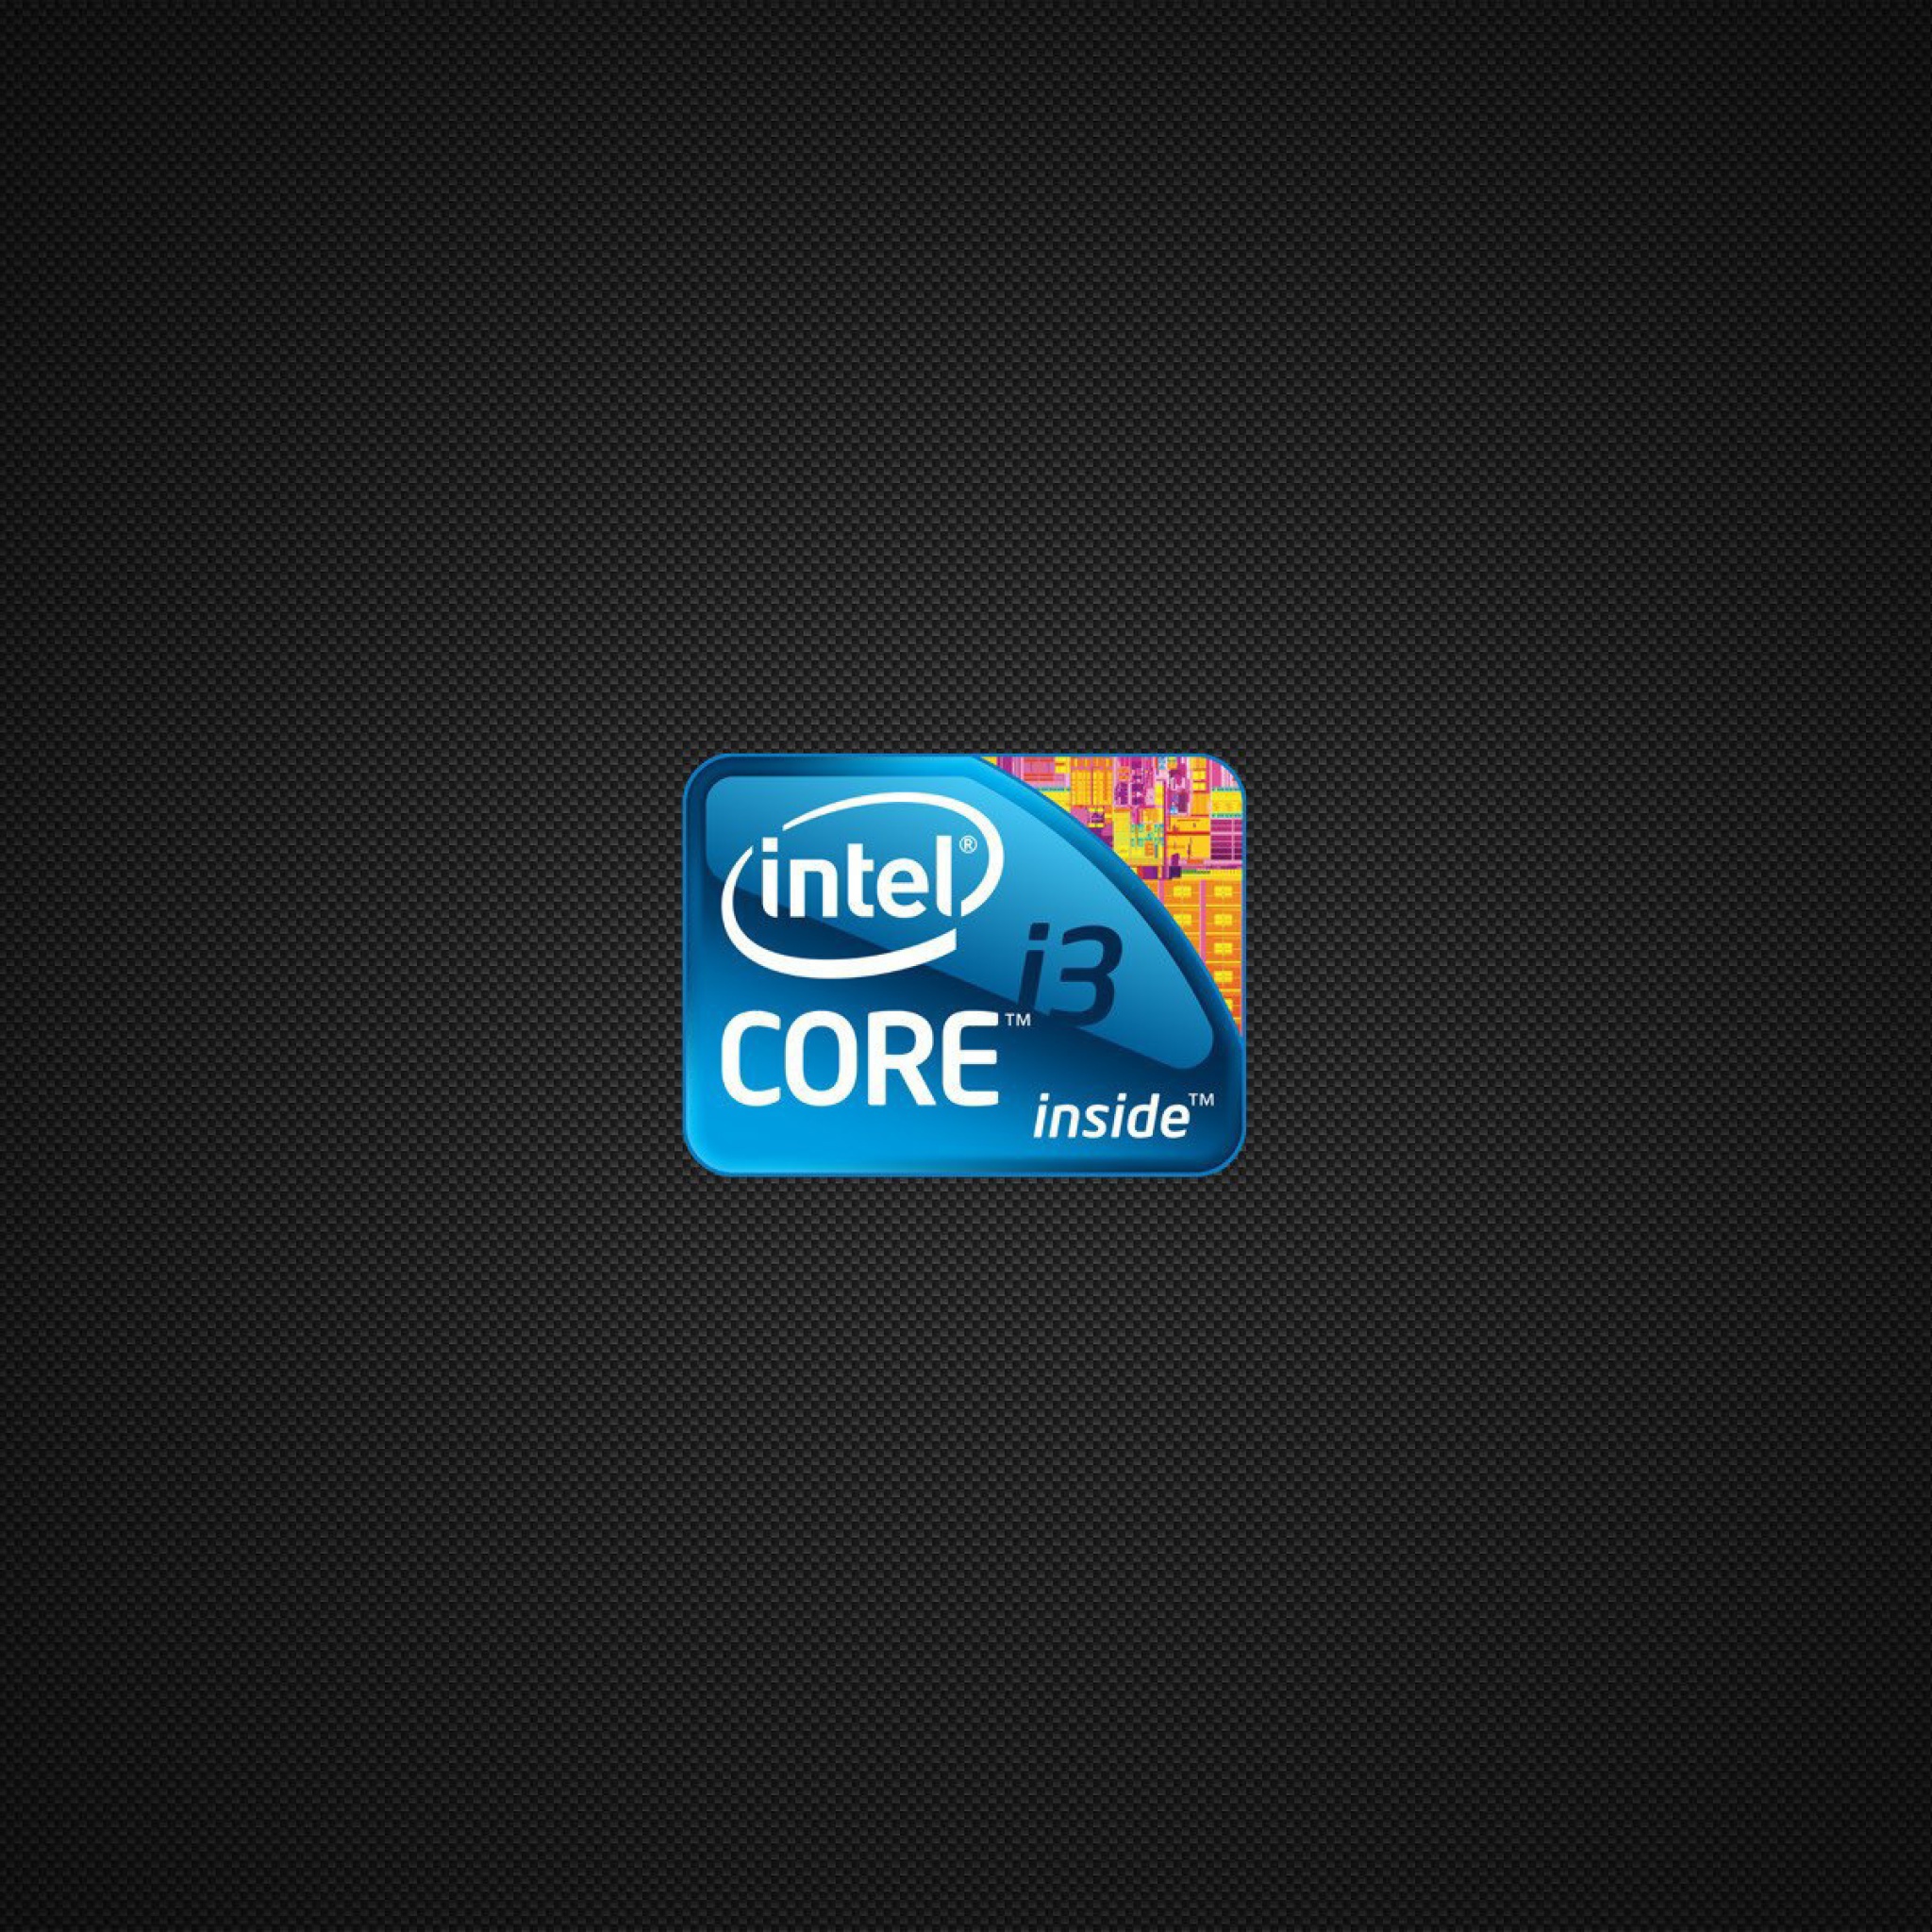 Das Intel Core i3 Processor Wallpaper 2048x2048